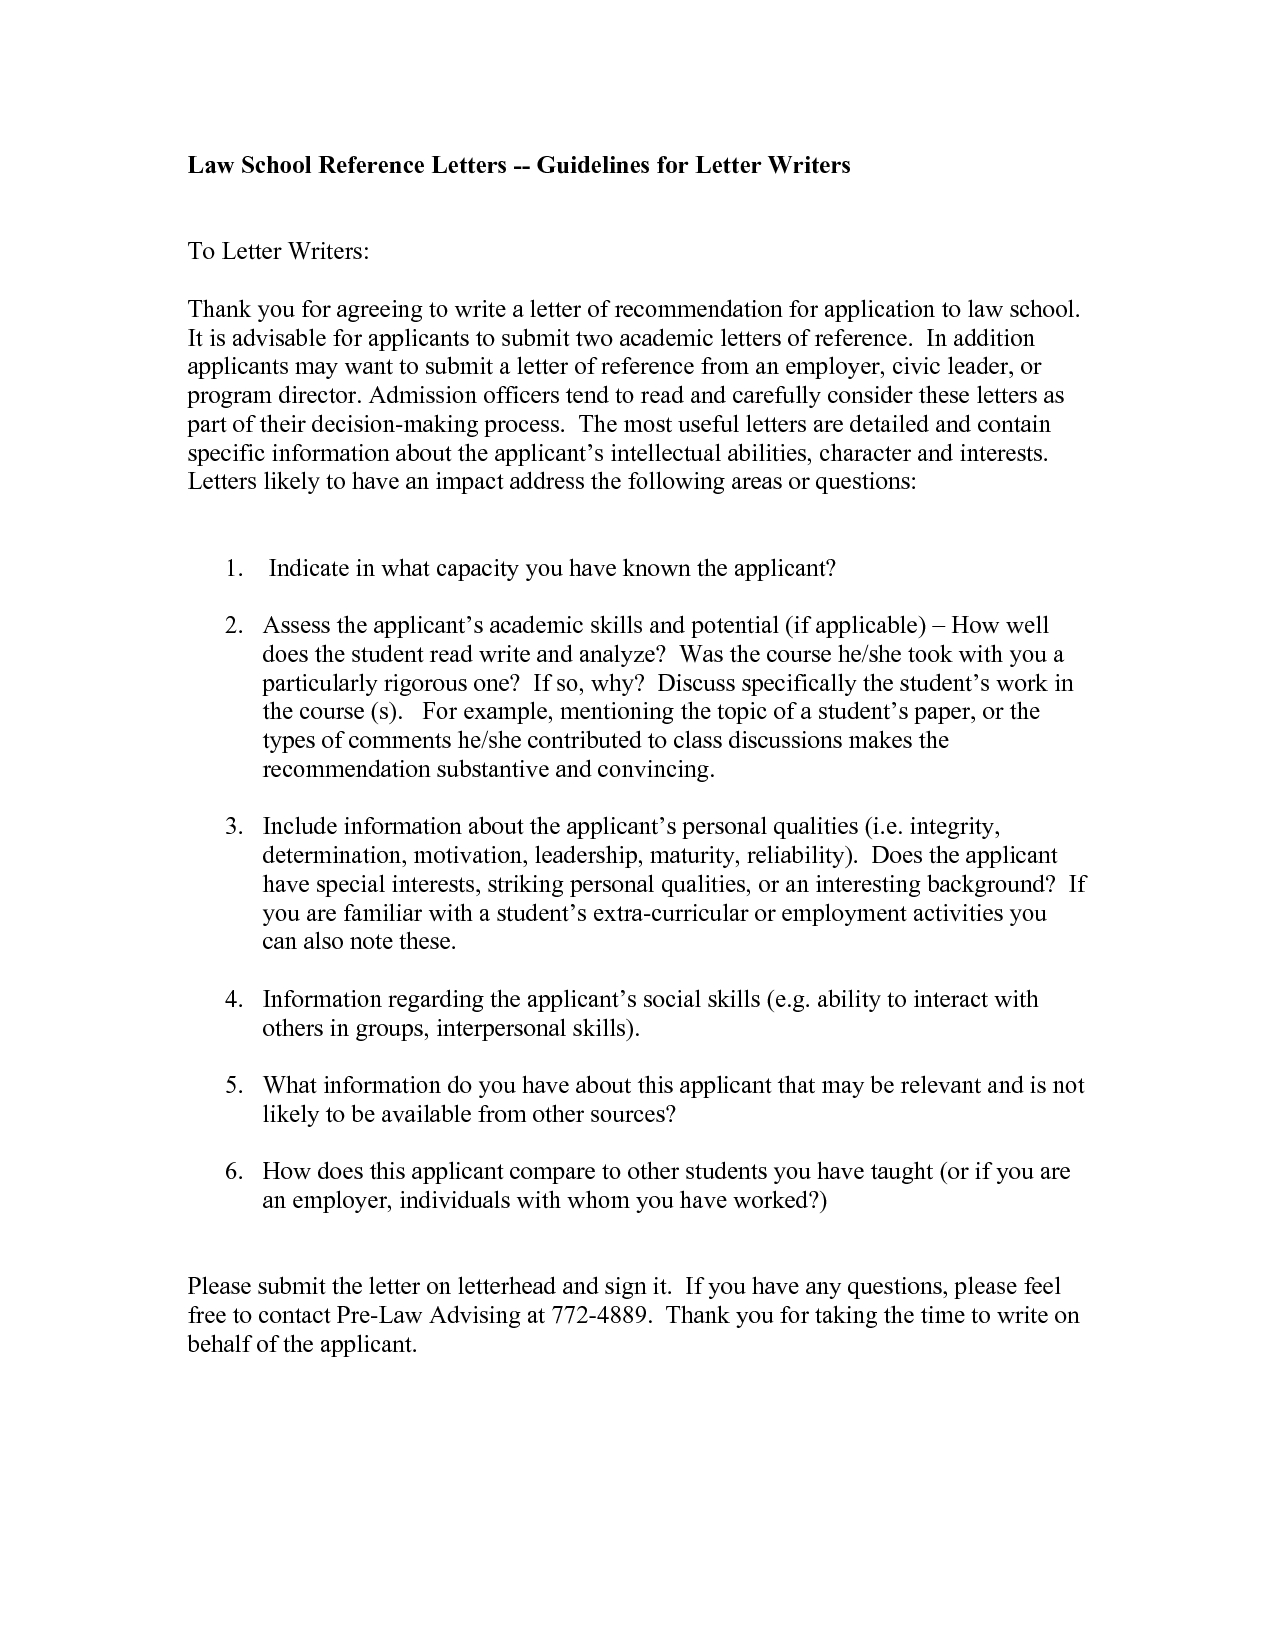 sample recommendation letter for law school admission - Banya